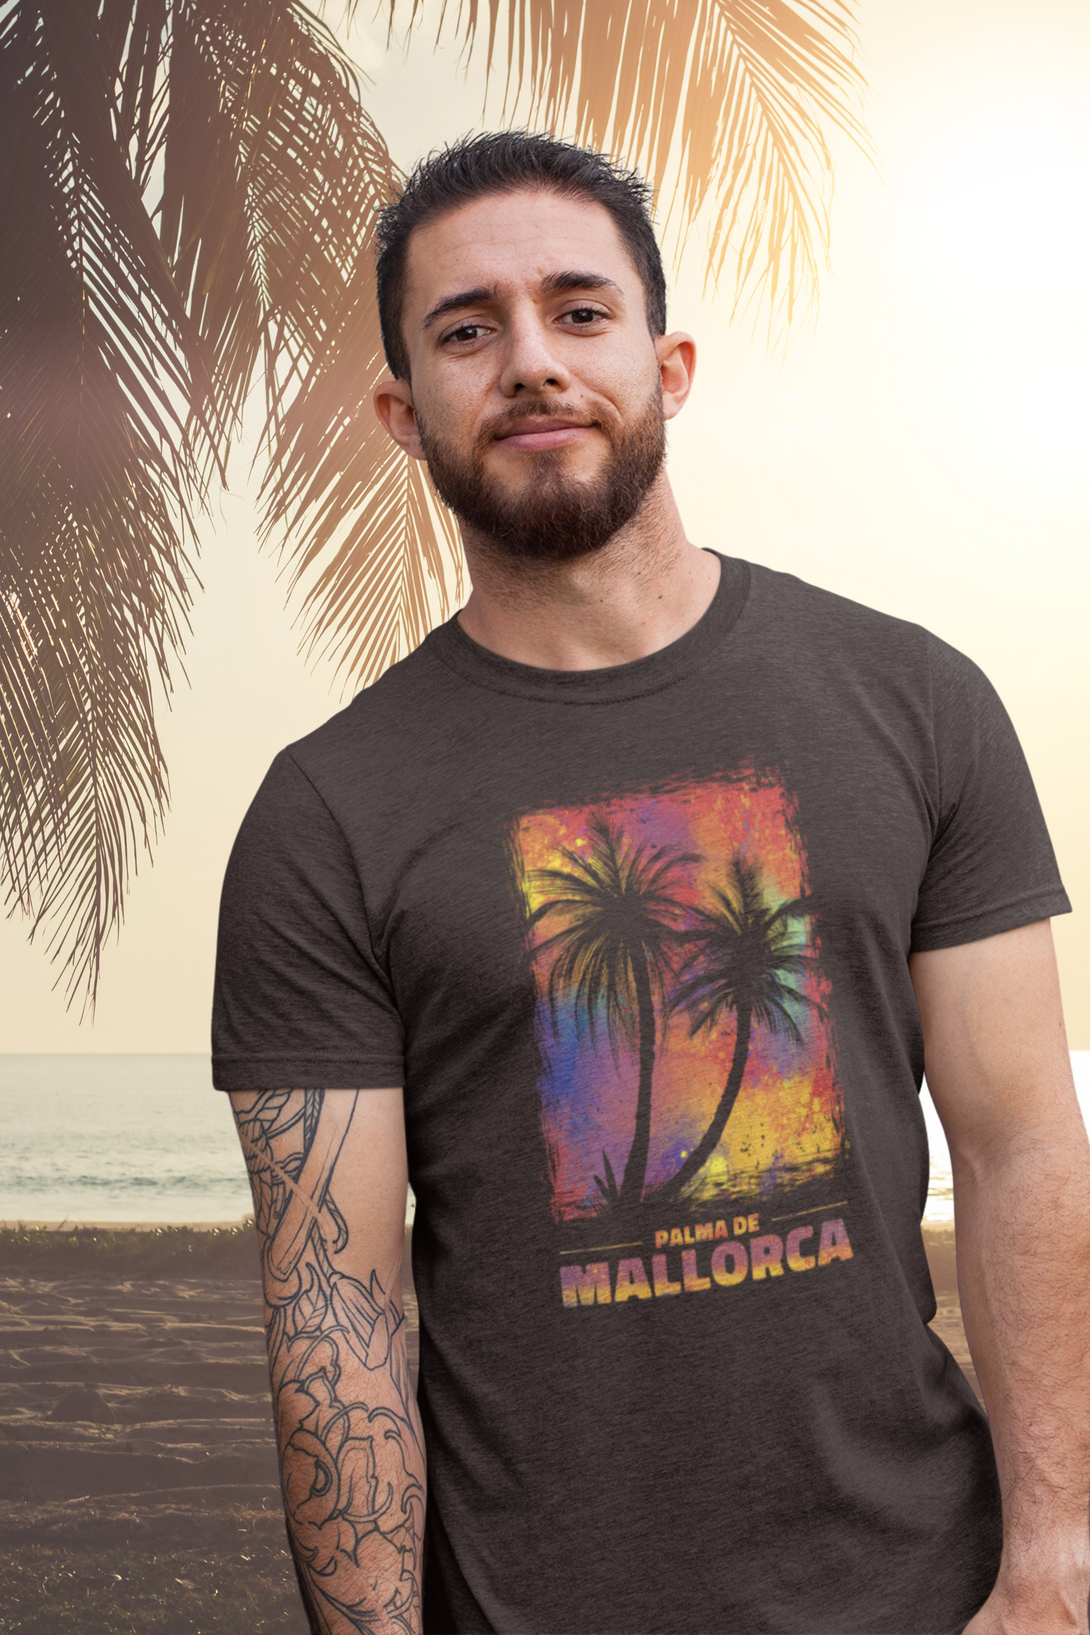 Palma De Mallorca Printed T-Shirt For Men - WowWaves - 2